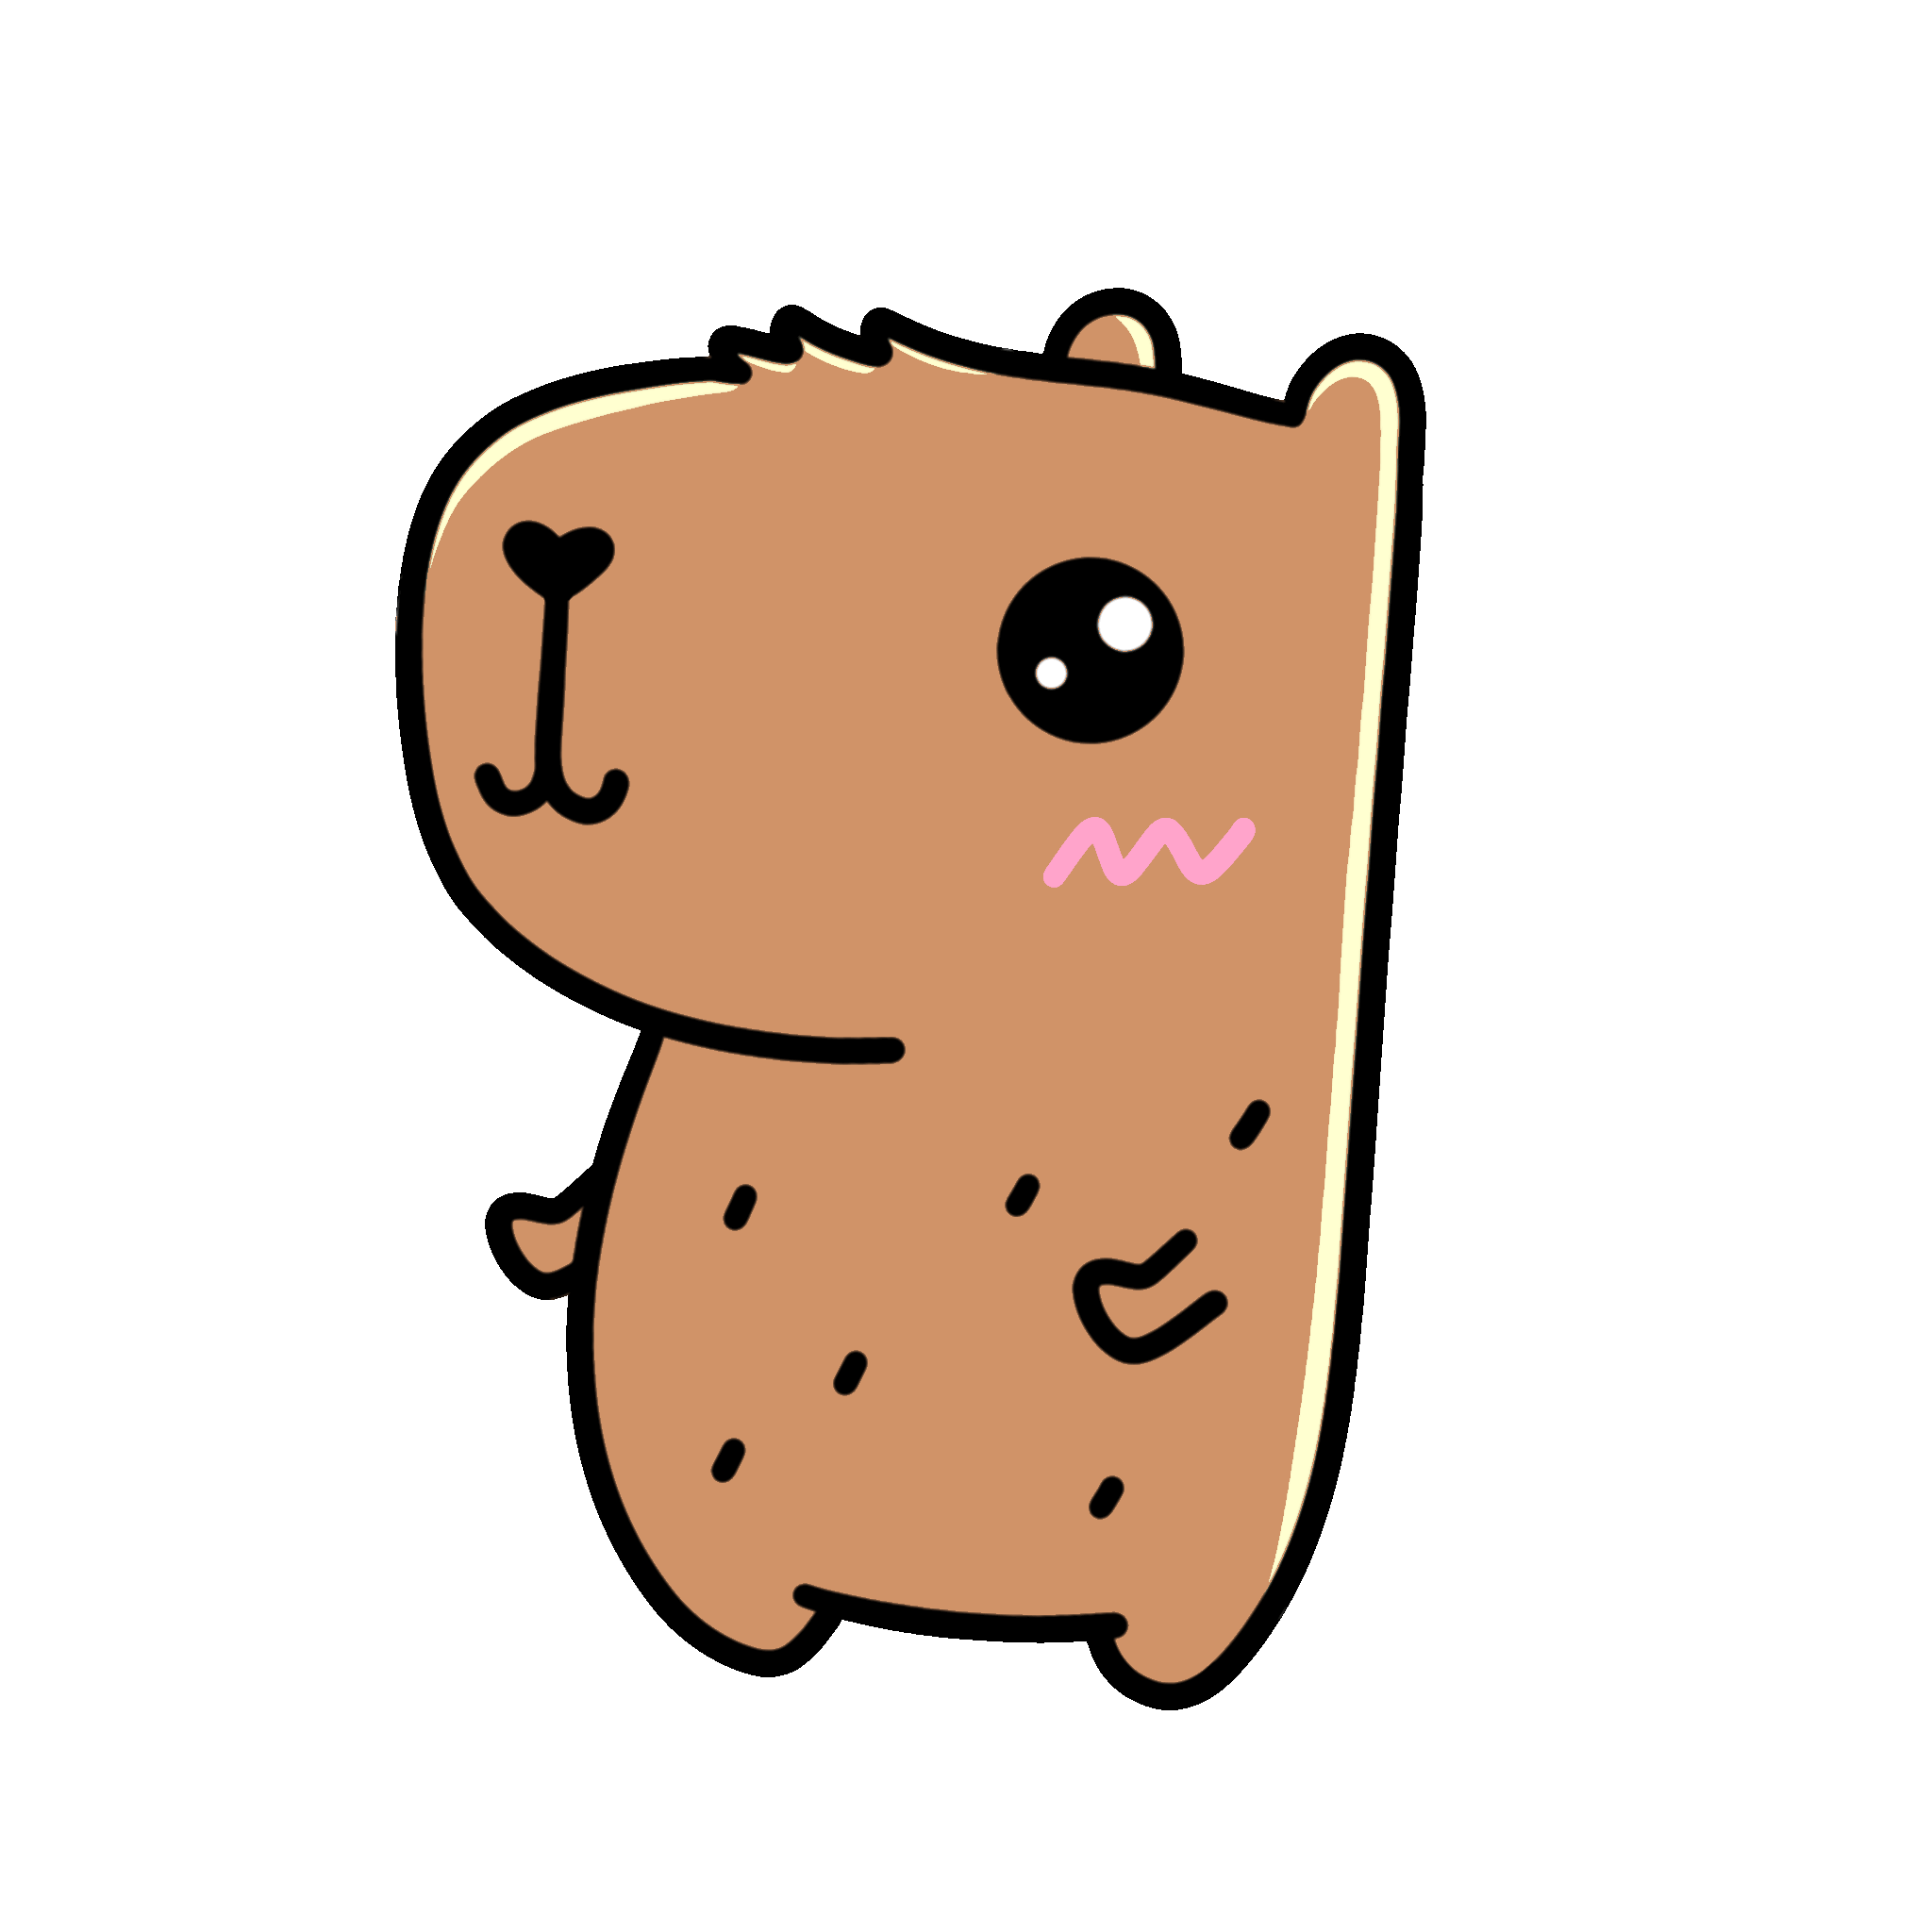 Capybara Capi Sticker by Capivarinha for iOS & Android | GIPHY